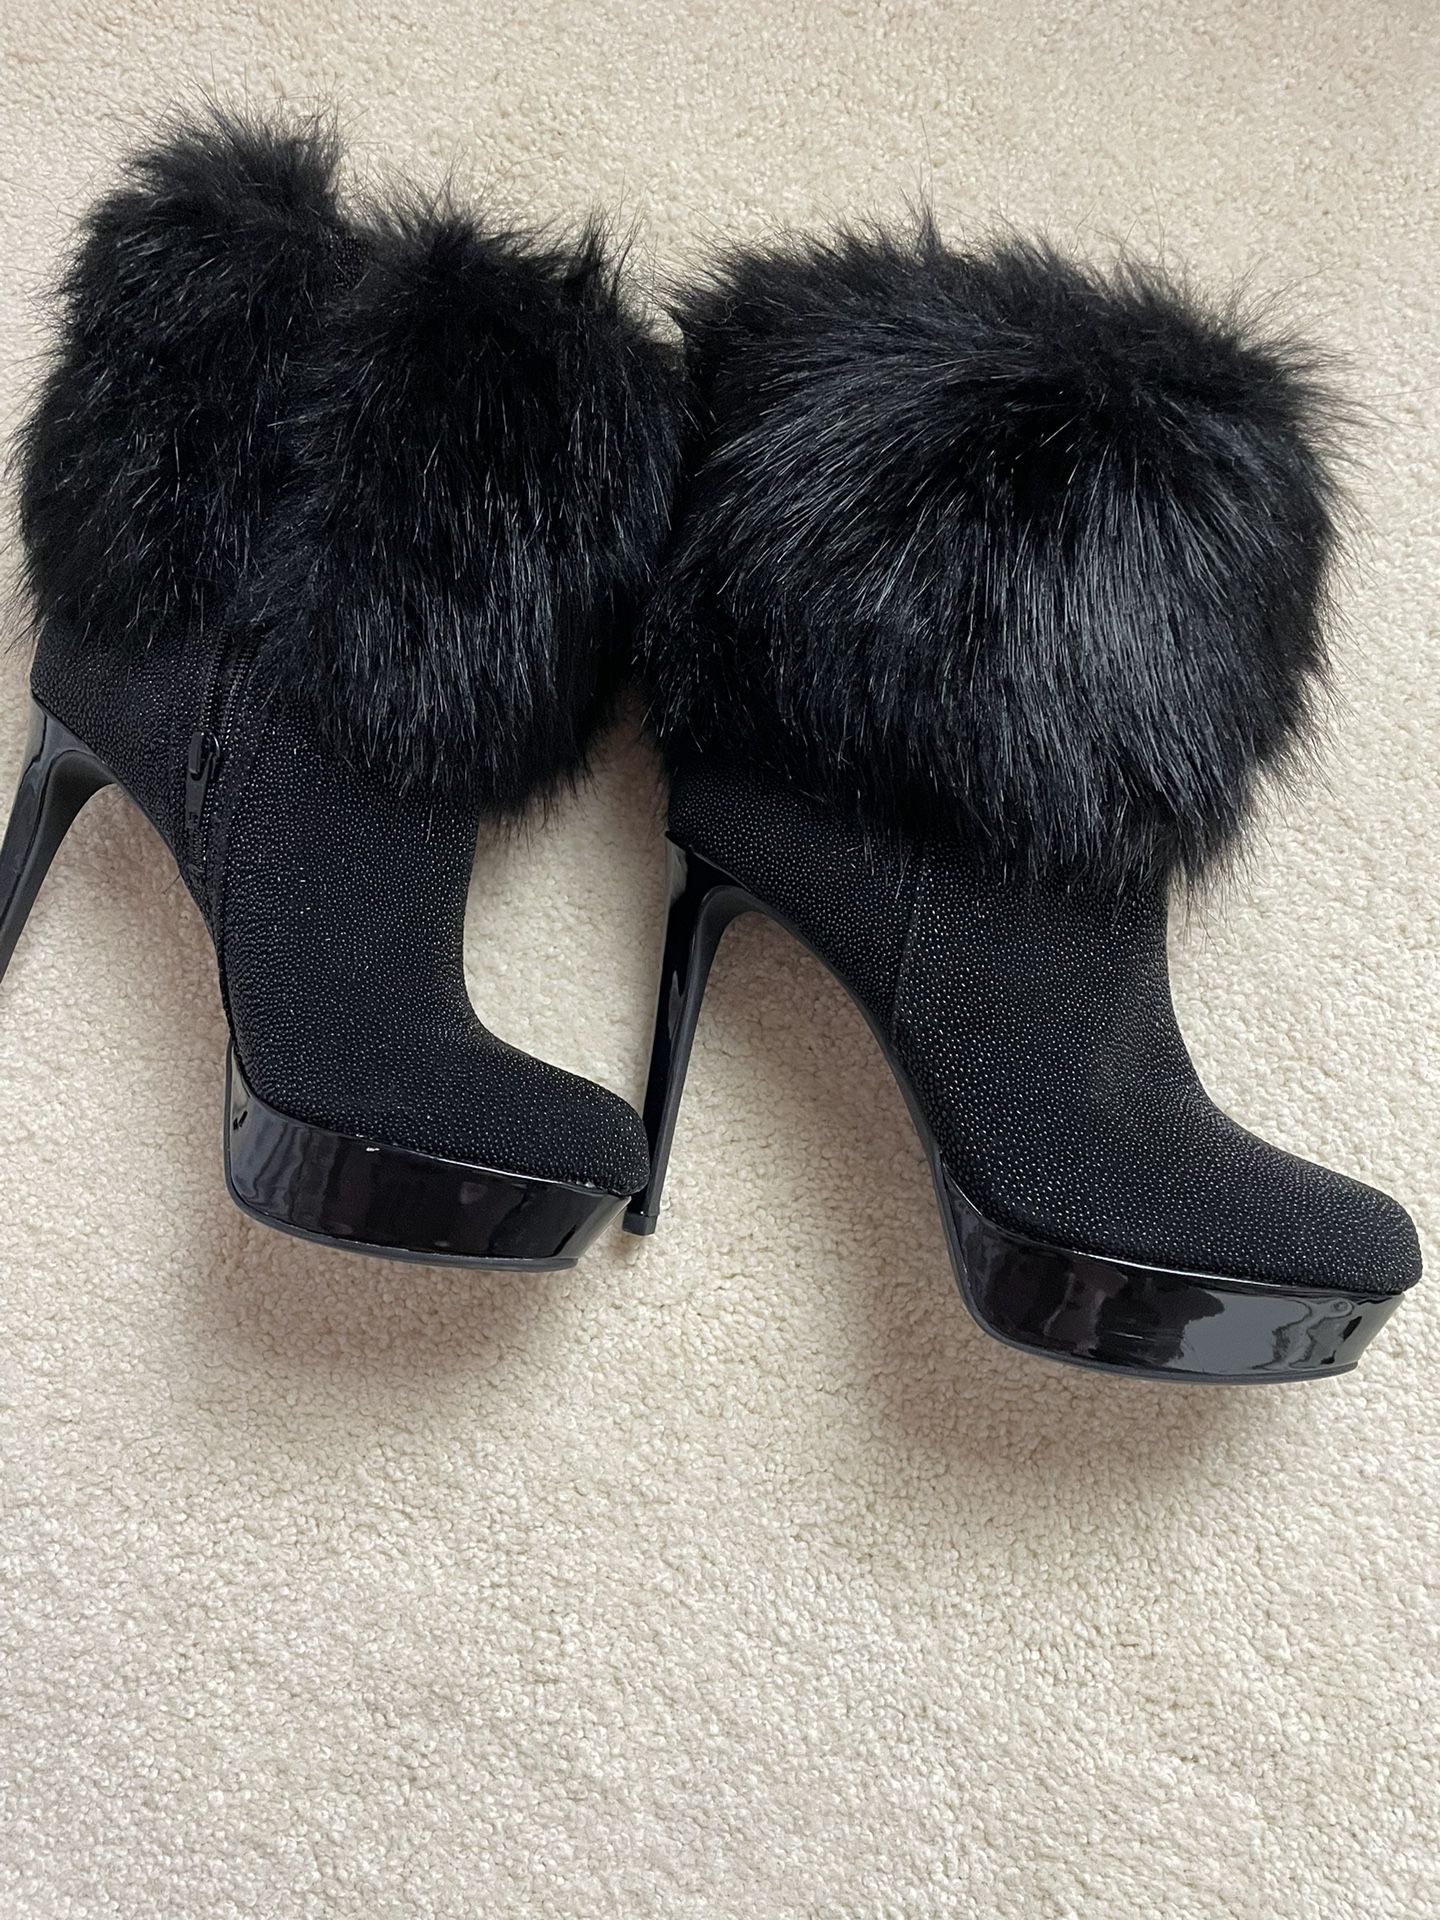 GIANNI BINI Black Platform High Heel Boots Leather Faux Fur Booties 9